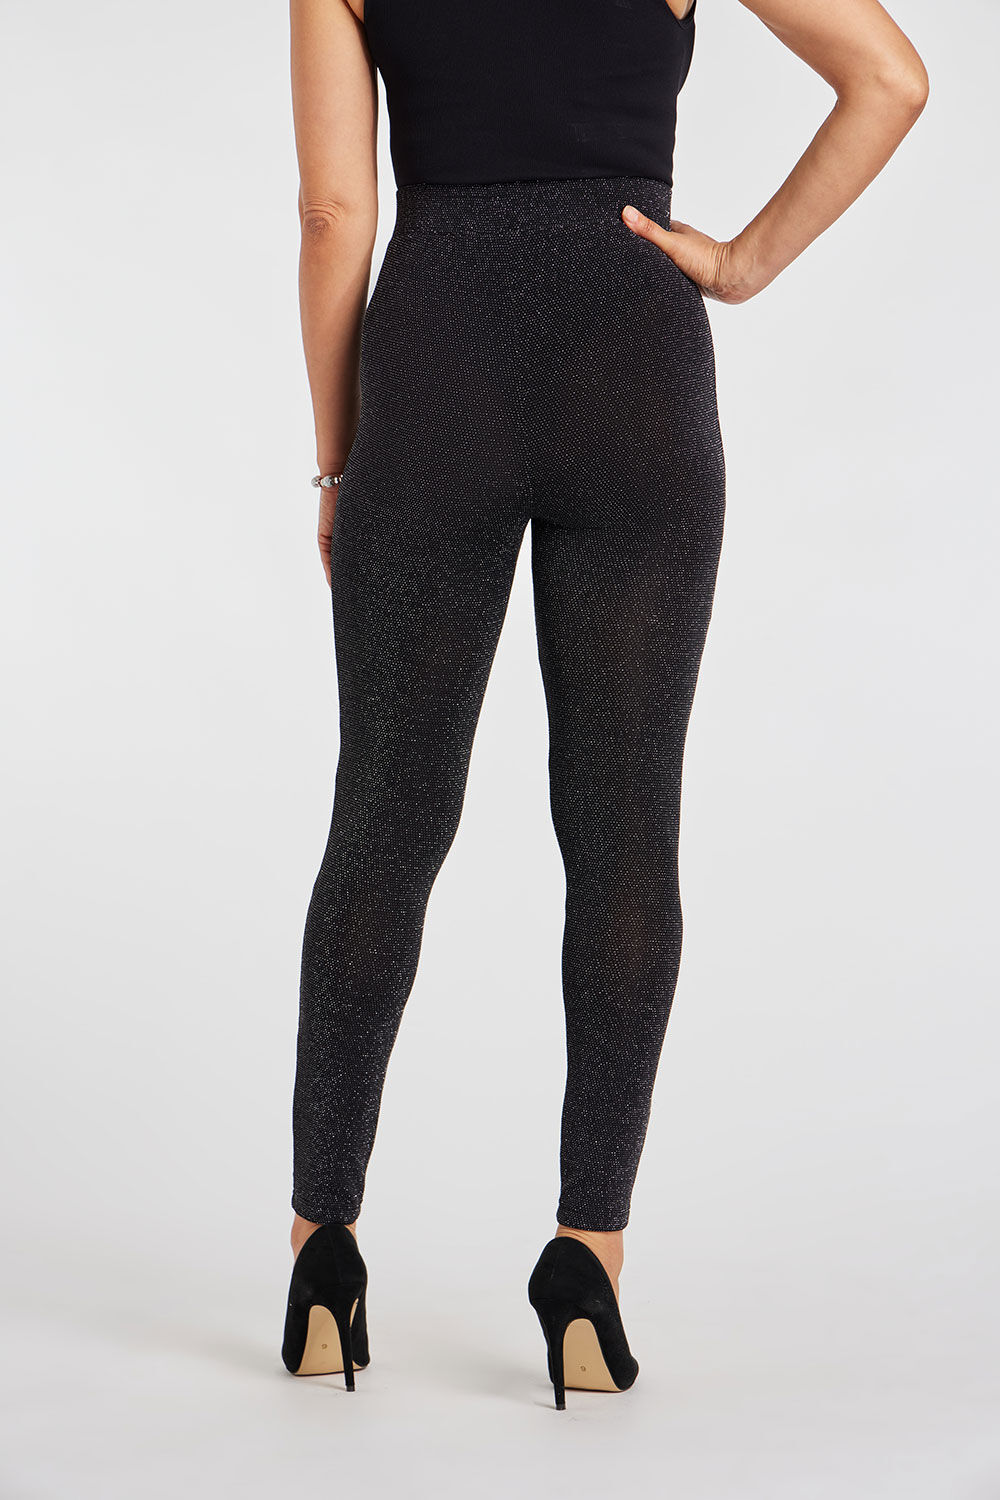 Express Super High Waisted Sequin Leggings Black Women's S | CoolSprings  Galleria